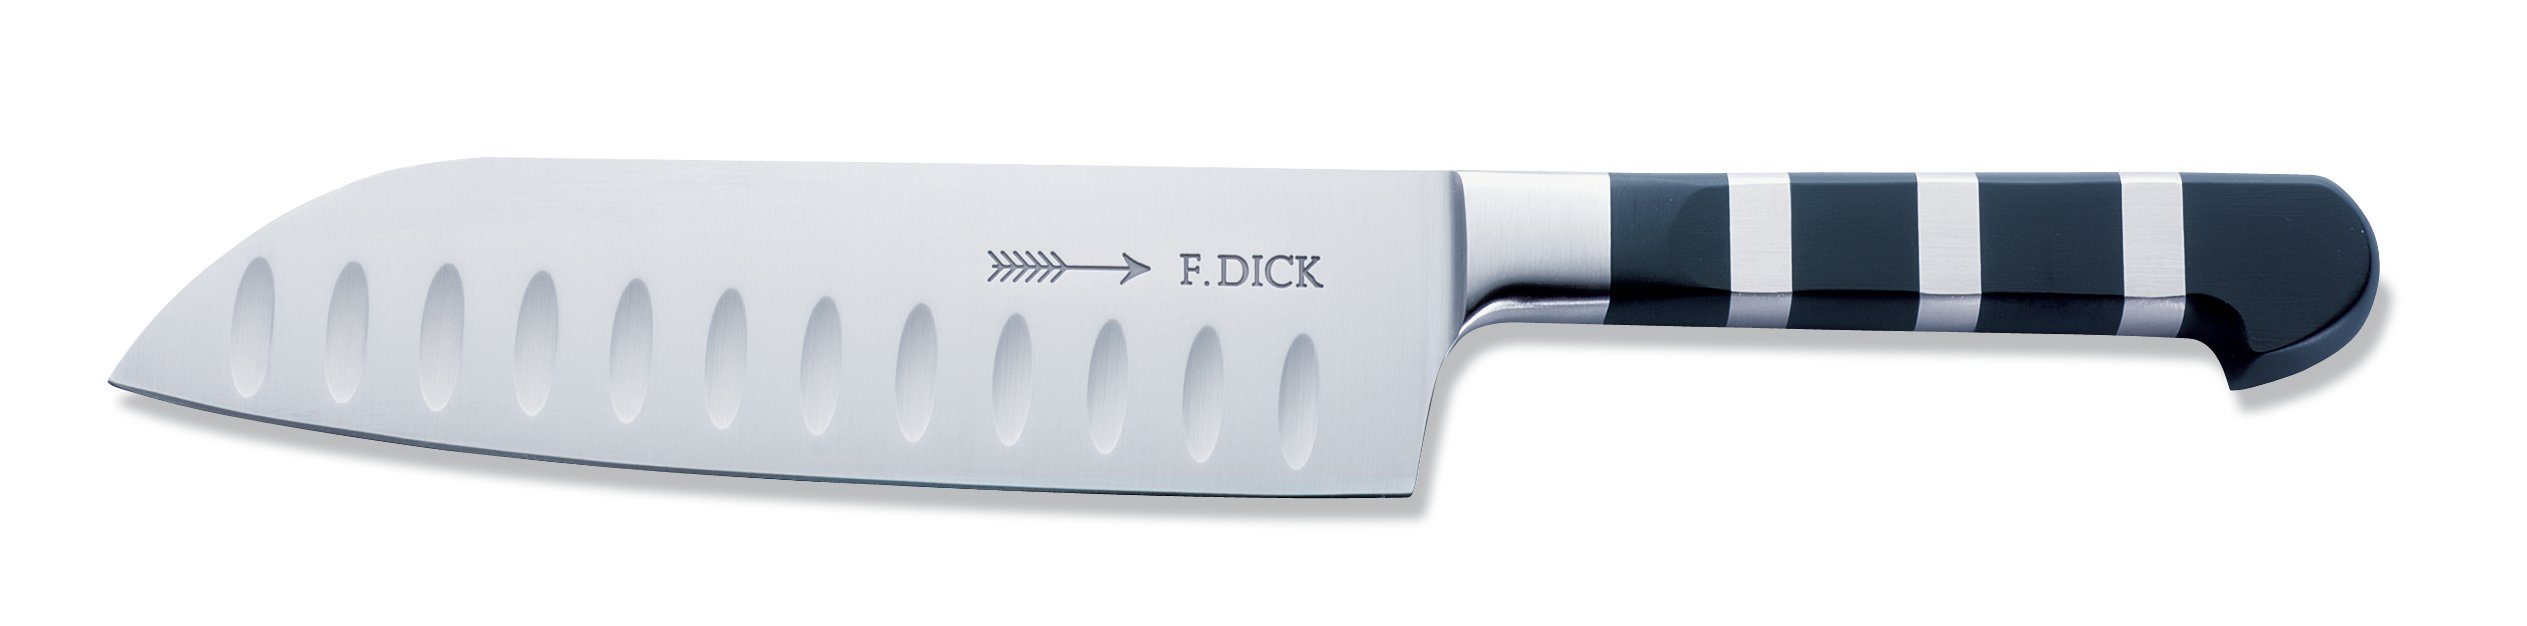 DICK F. mit Dick 1905 Messer-Set + Santoku Küchenmesser Messerblock Schere Kochmesser